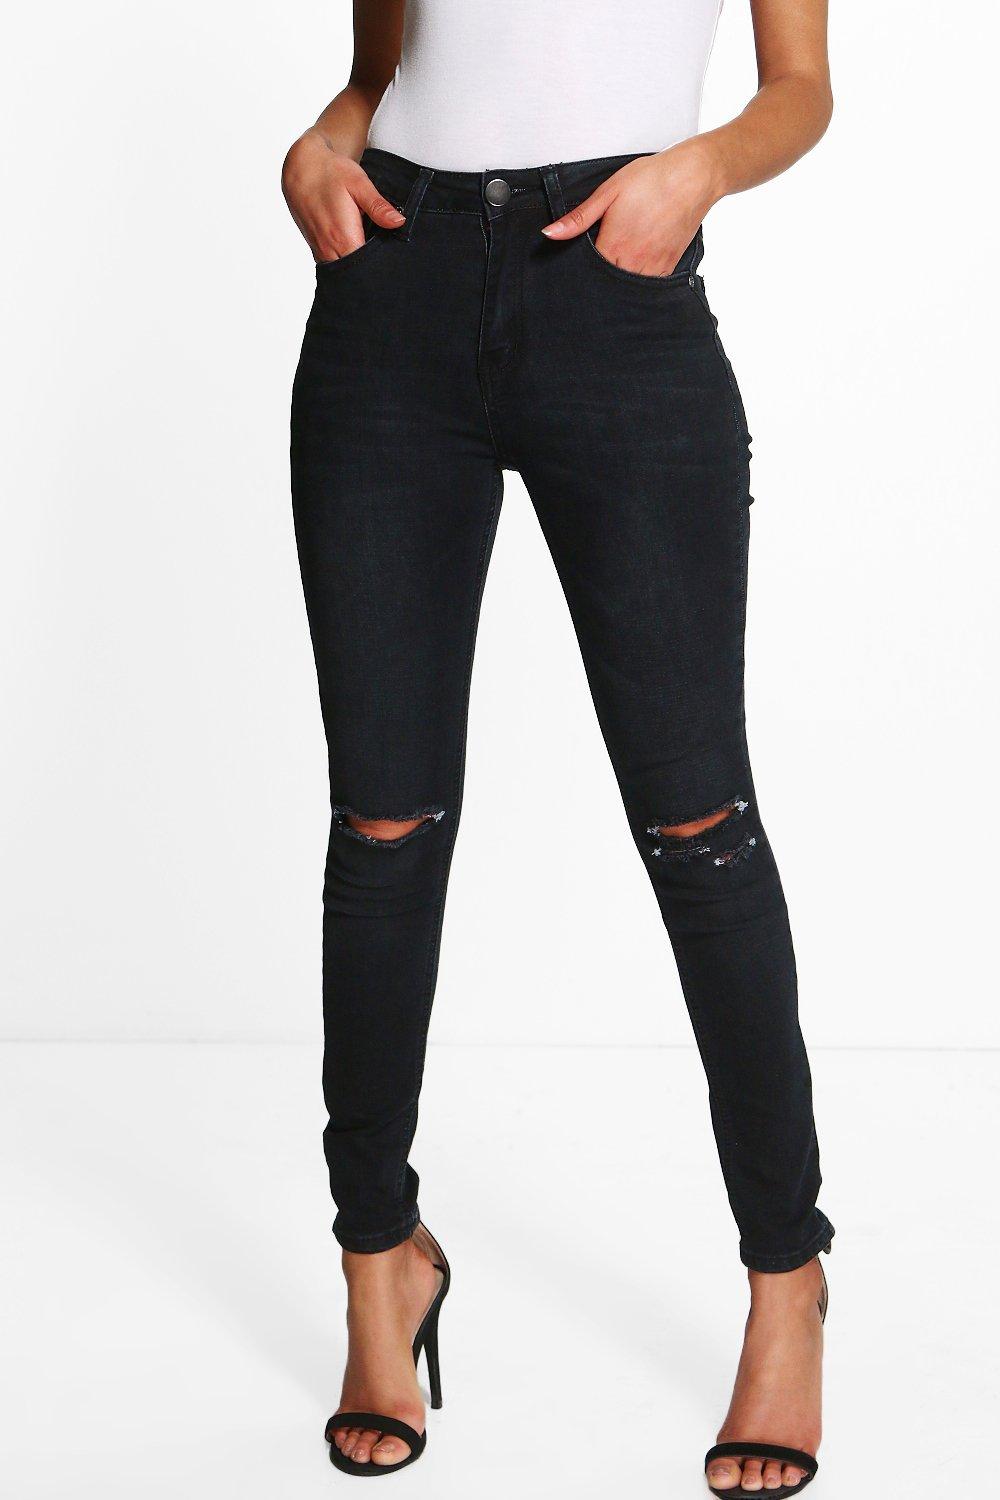 petite high waisted jeans black